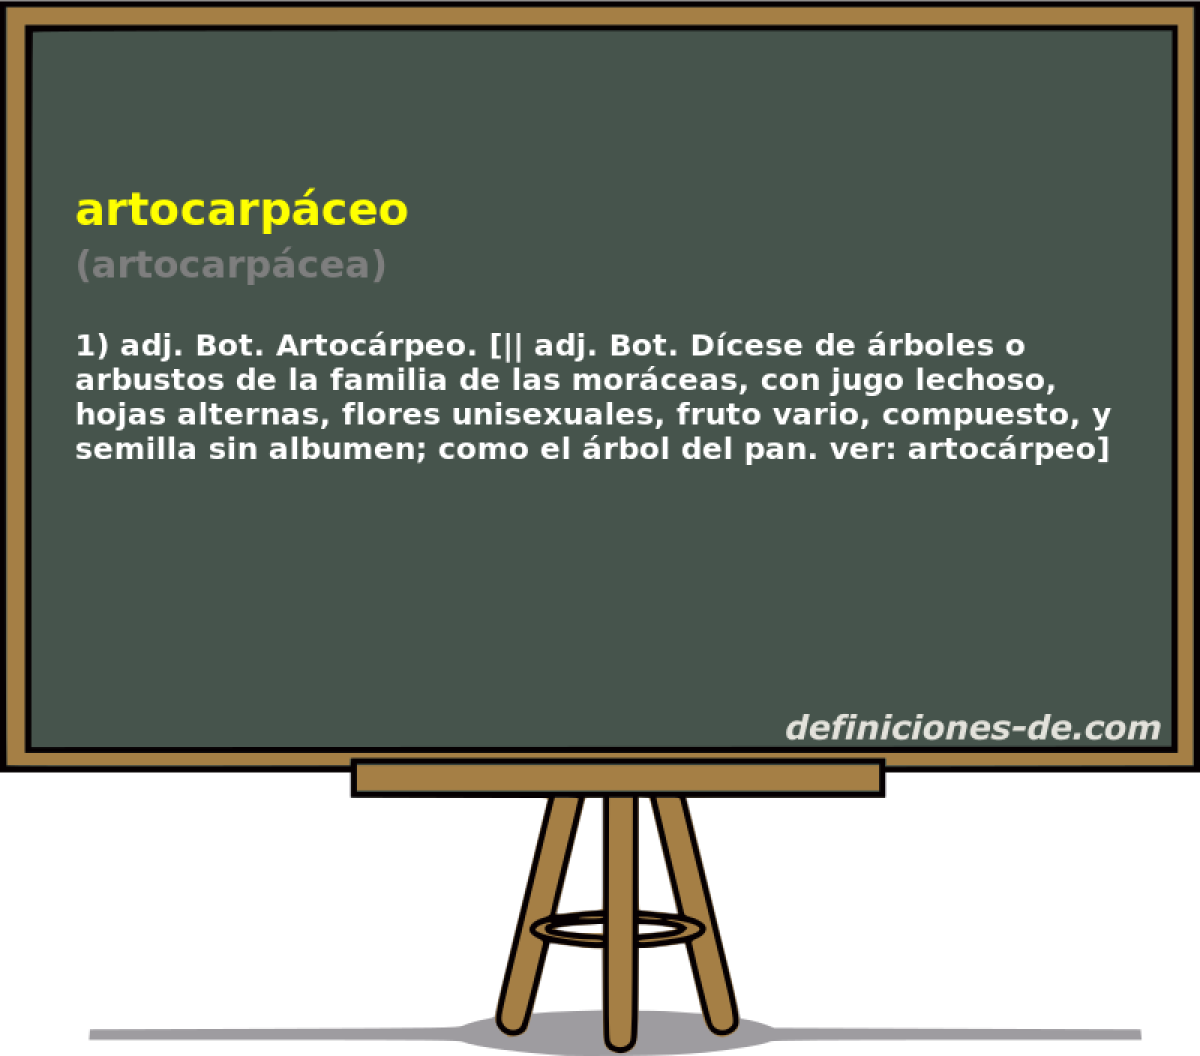 artocarpceo (artocarpcea)